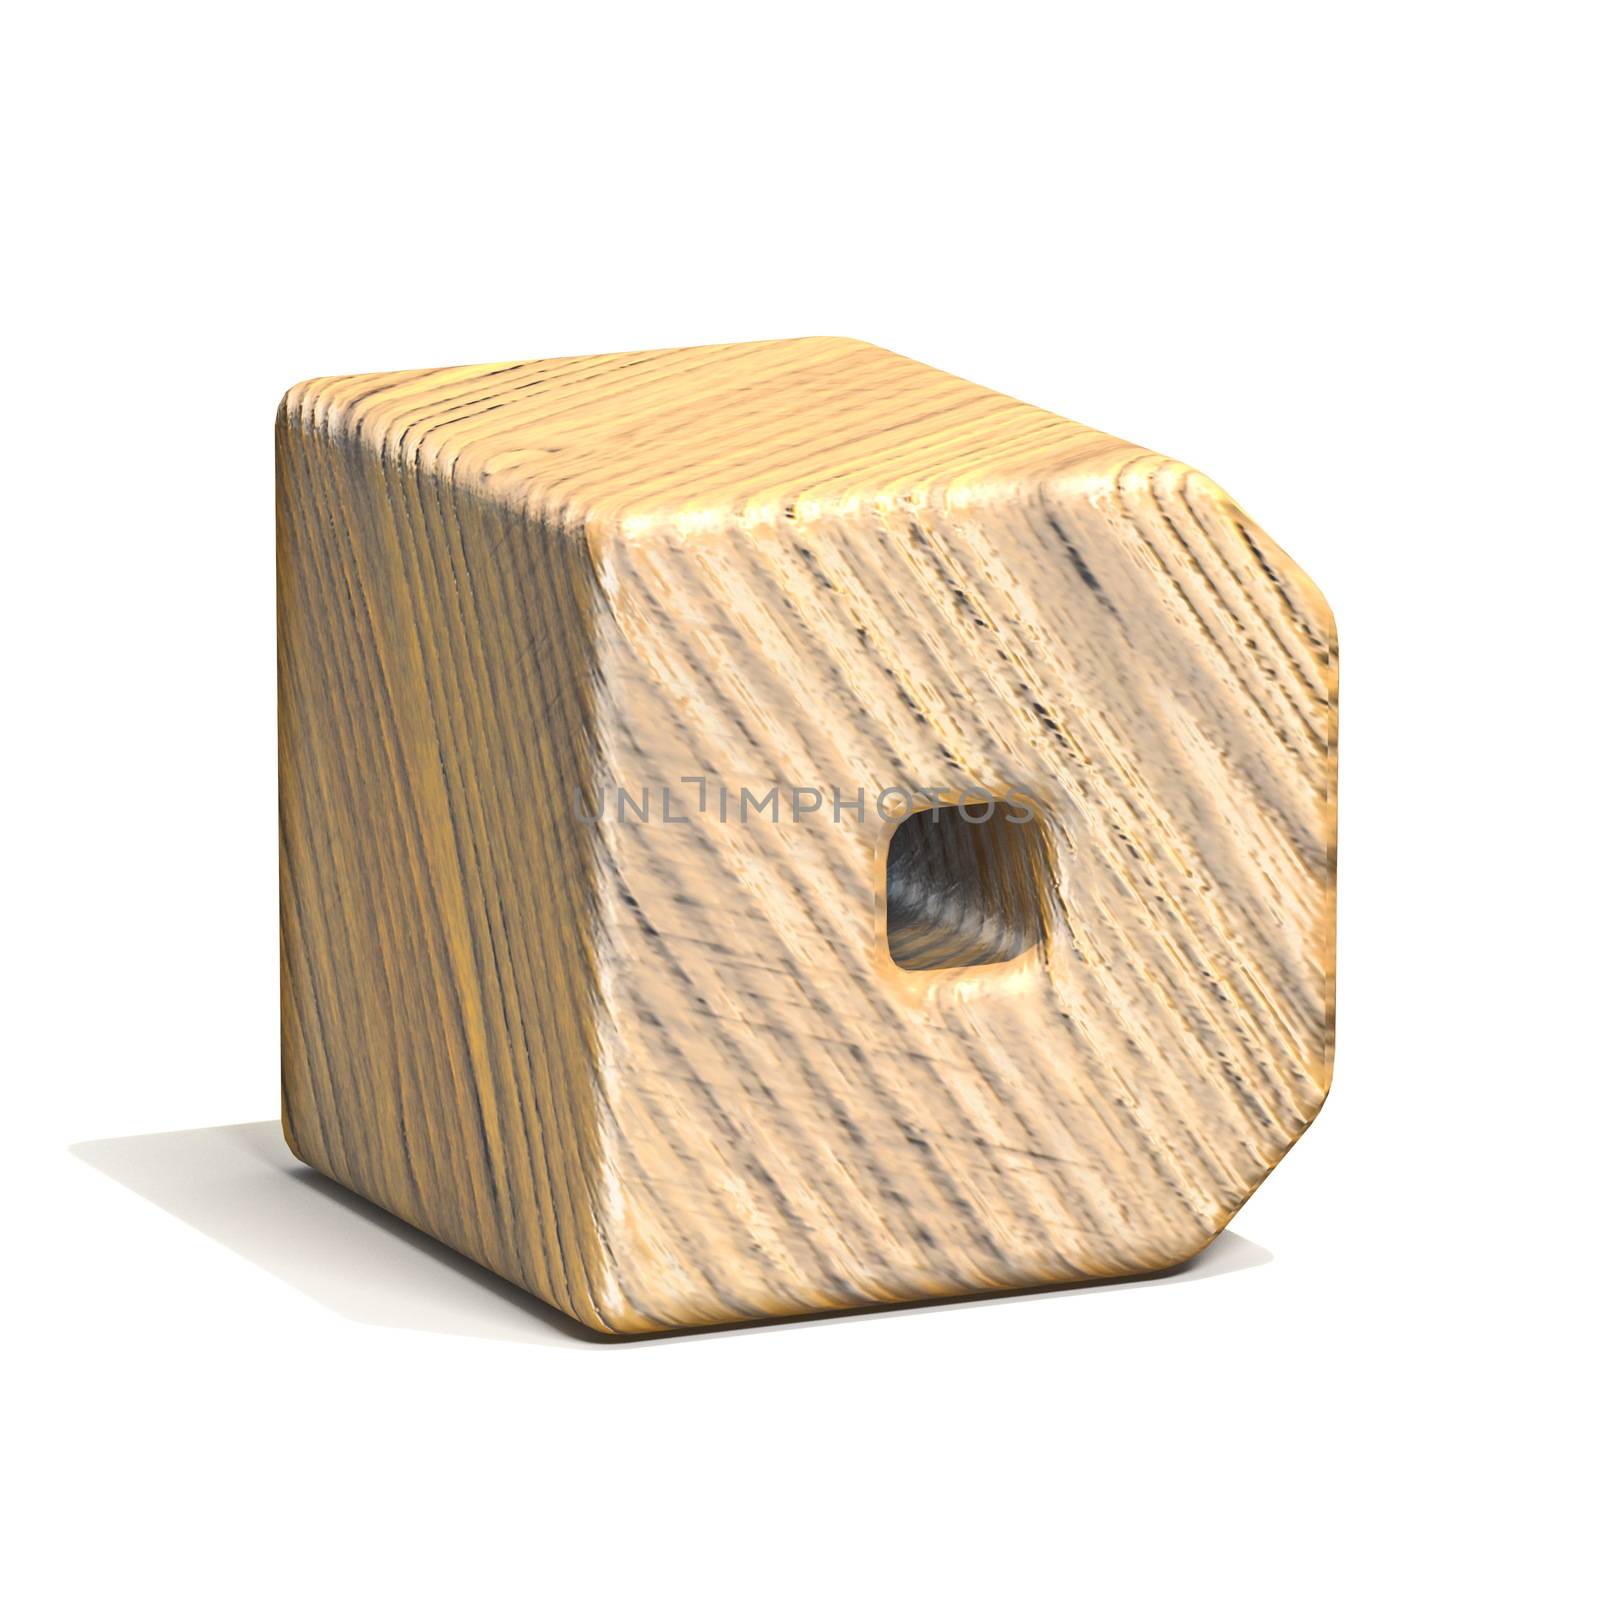 Solid wooden cube font Letter D 3D by djmilic